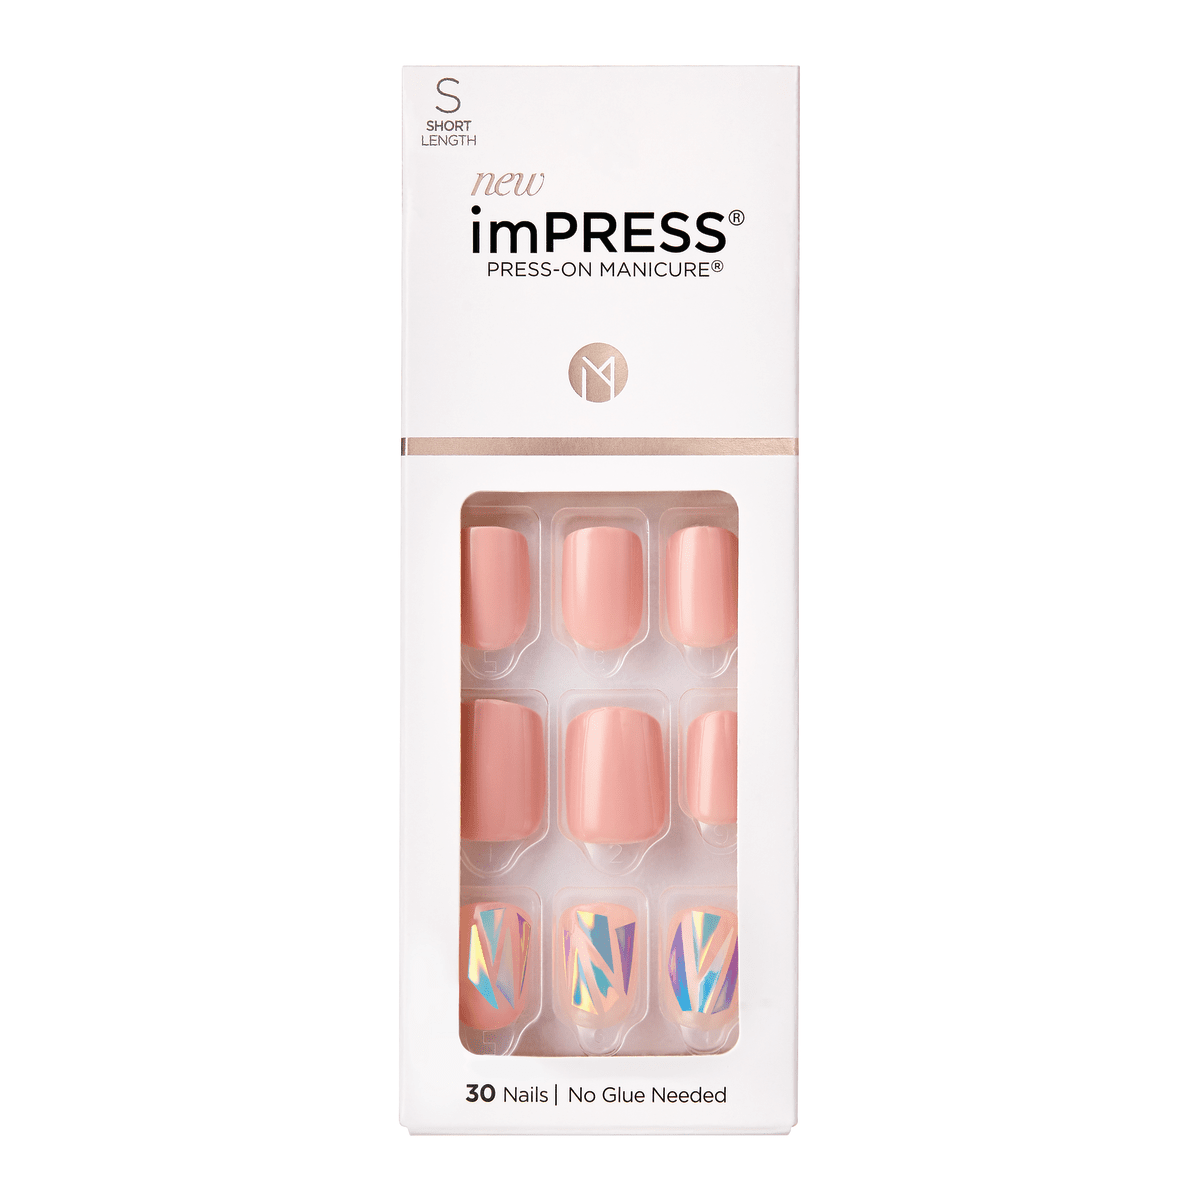 imPRESS Press-On Manicure - Miracle